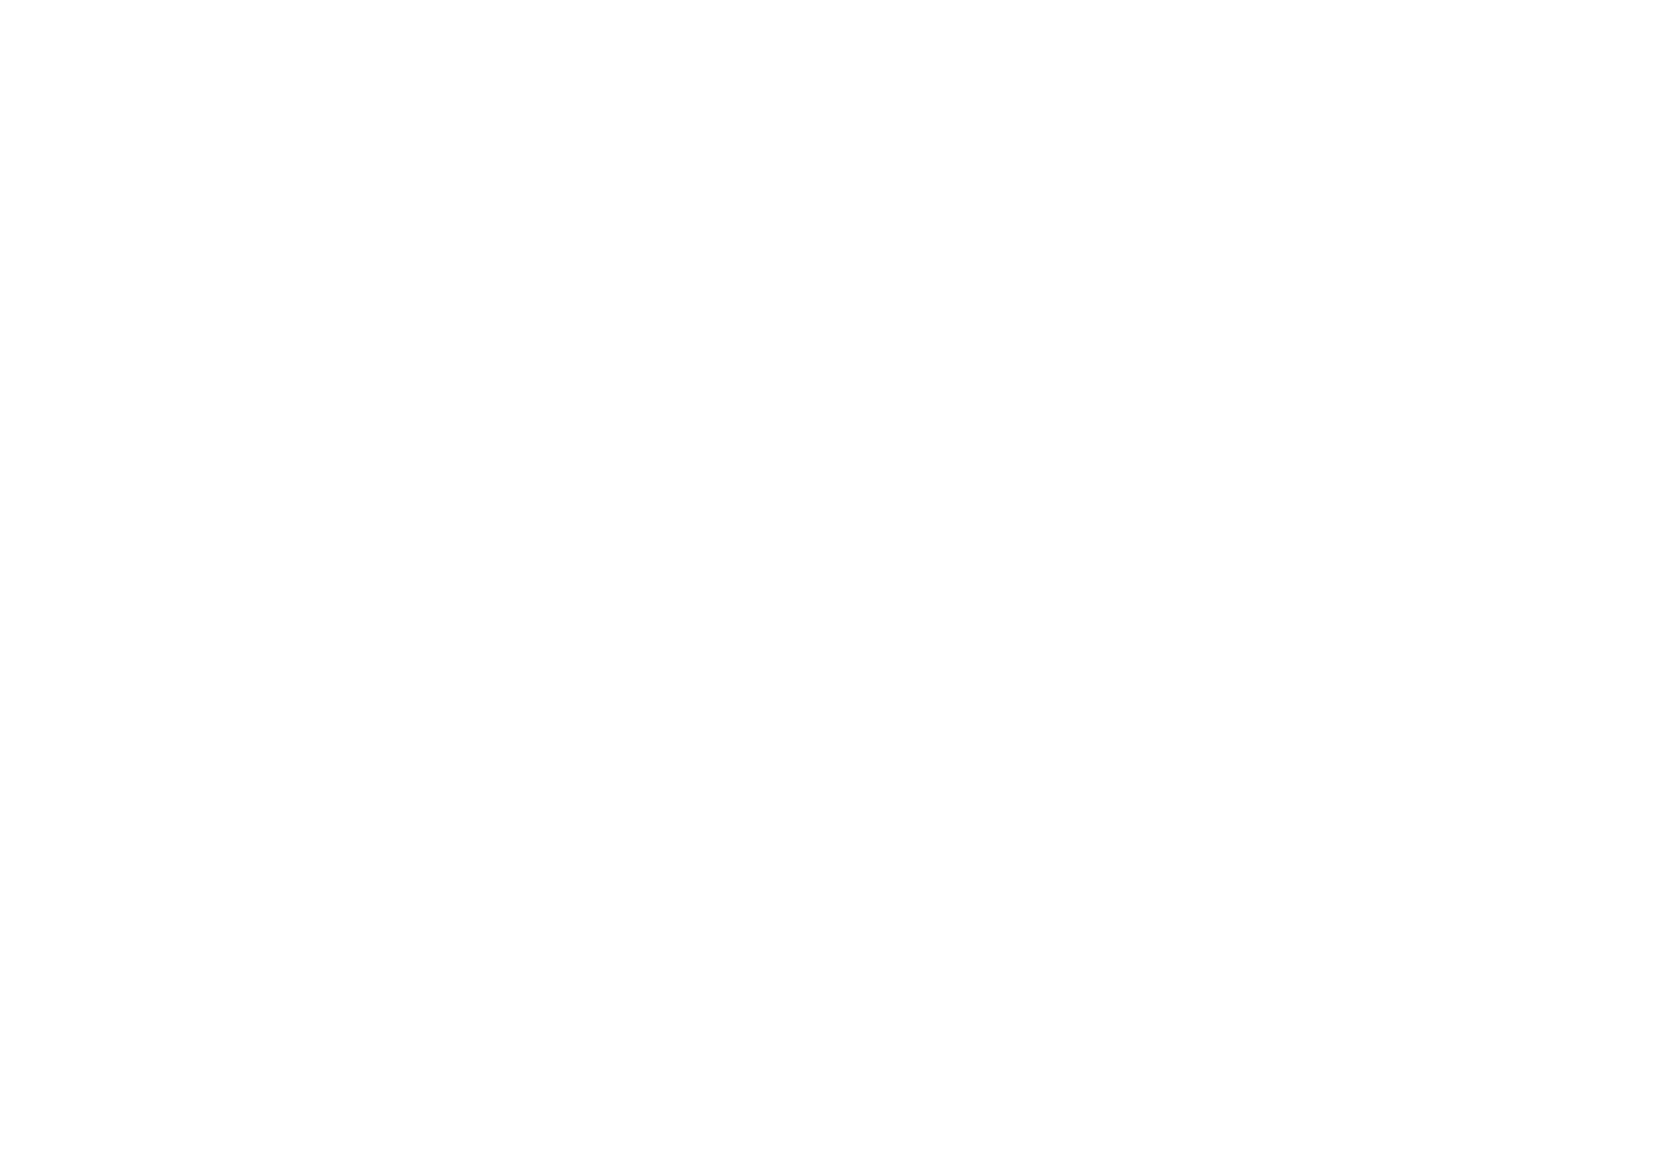 BEECH_Resort_Fleesensee_neg